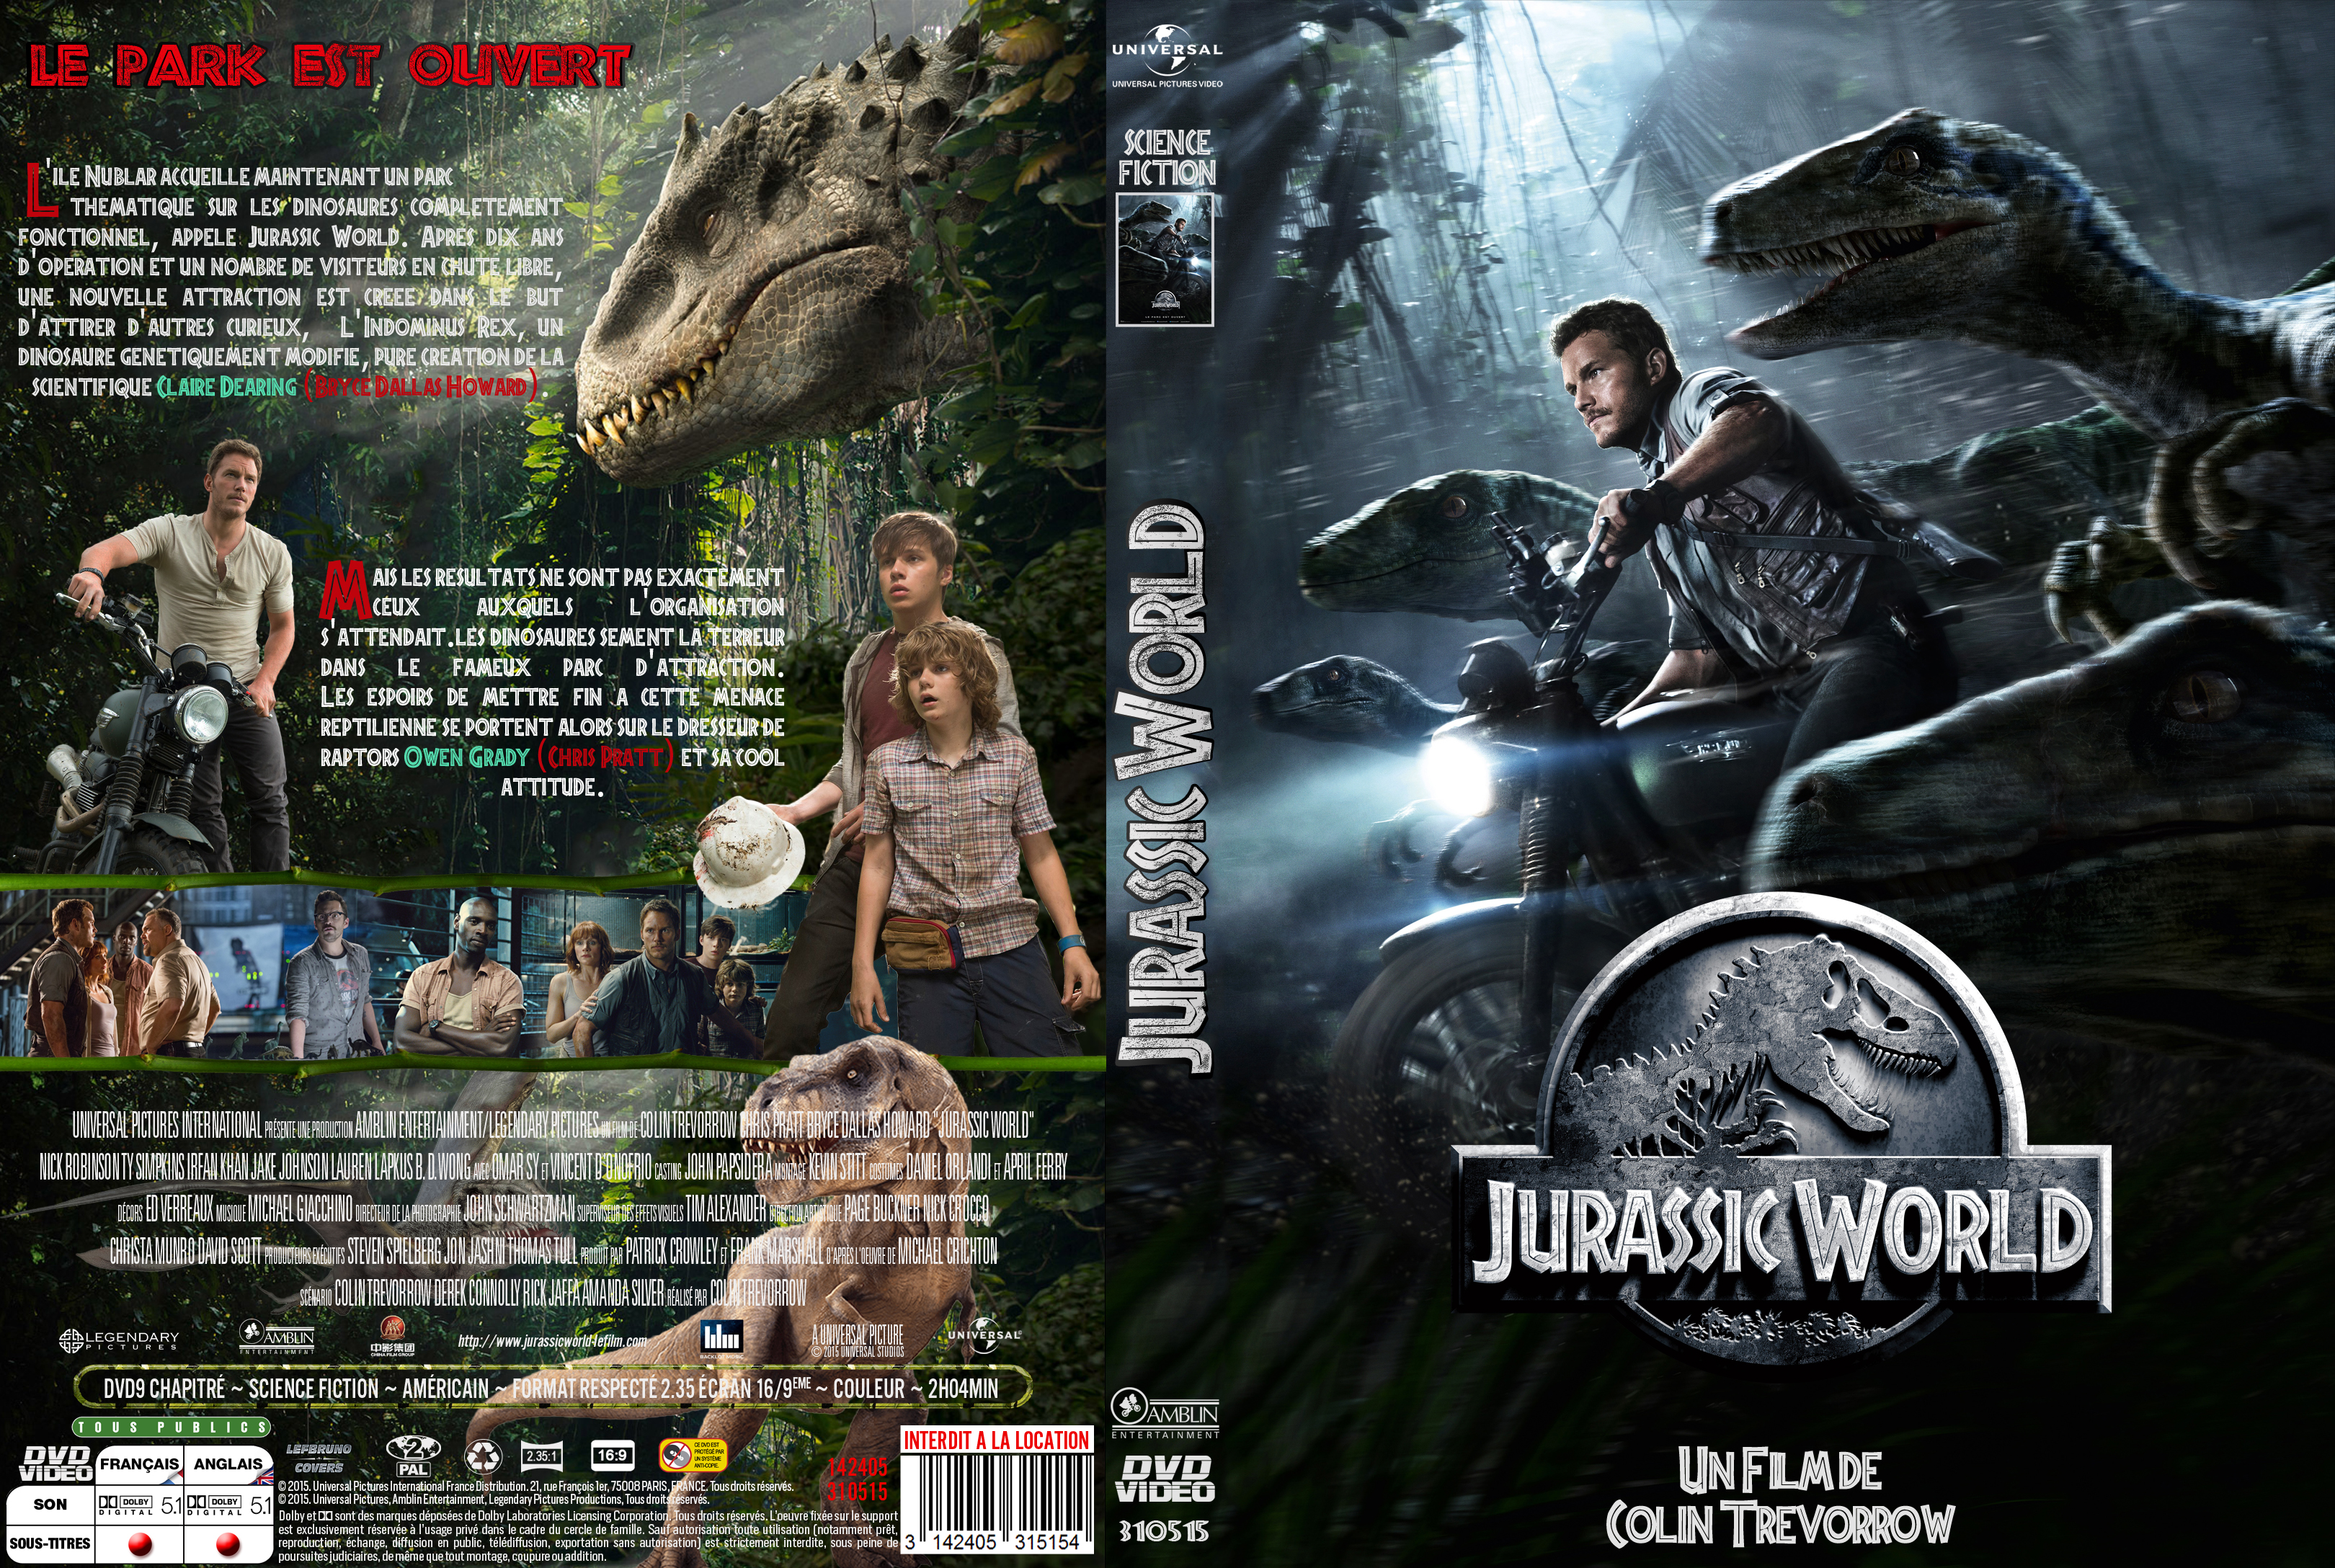 Jaquette DVD Jurassic World custom v2